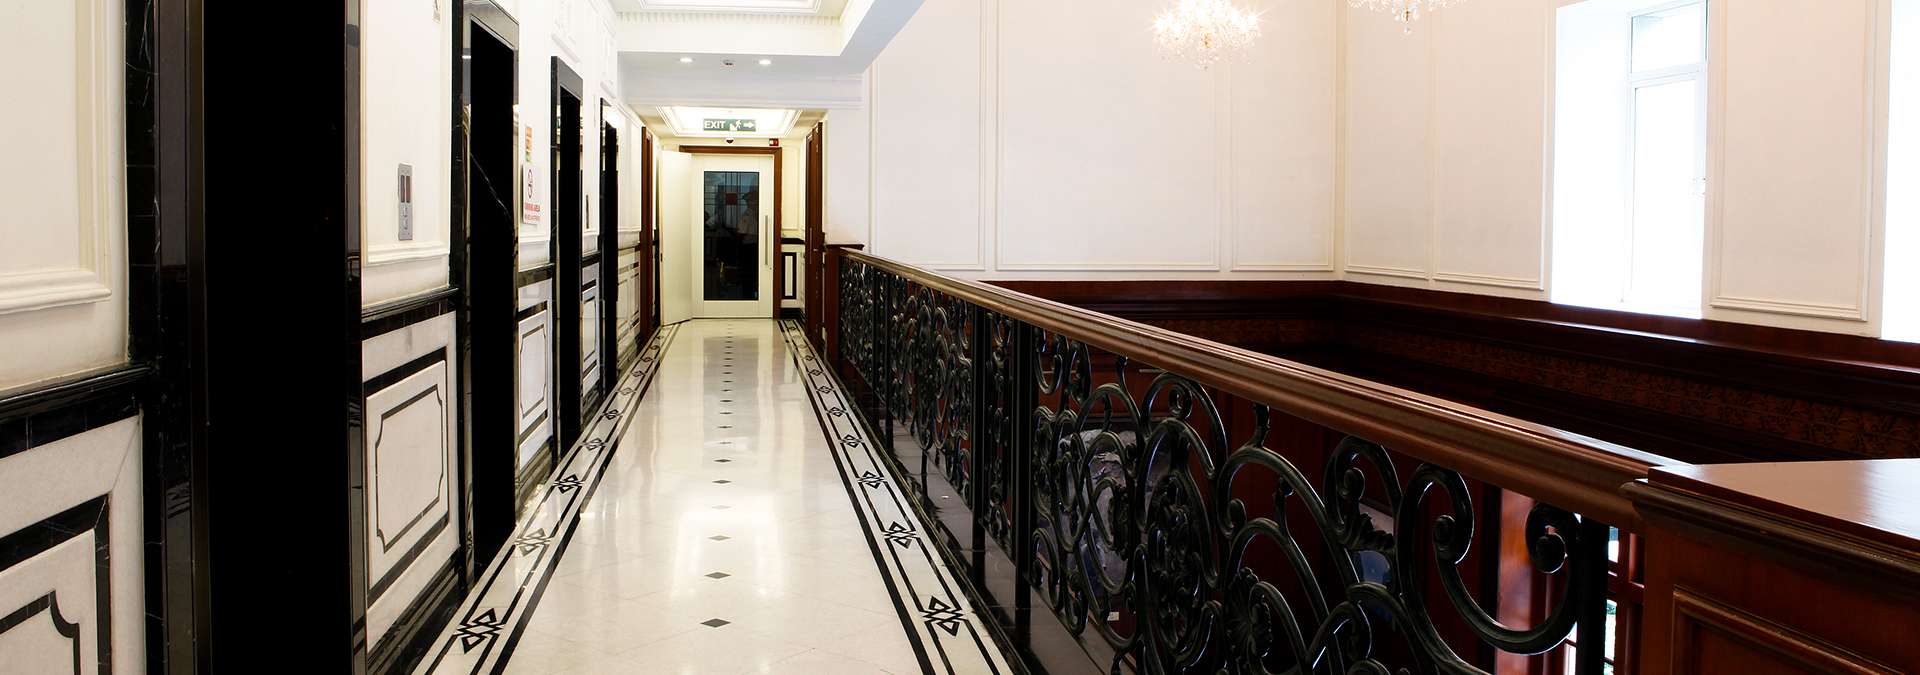 hallway5